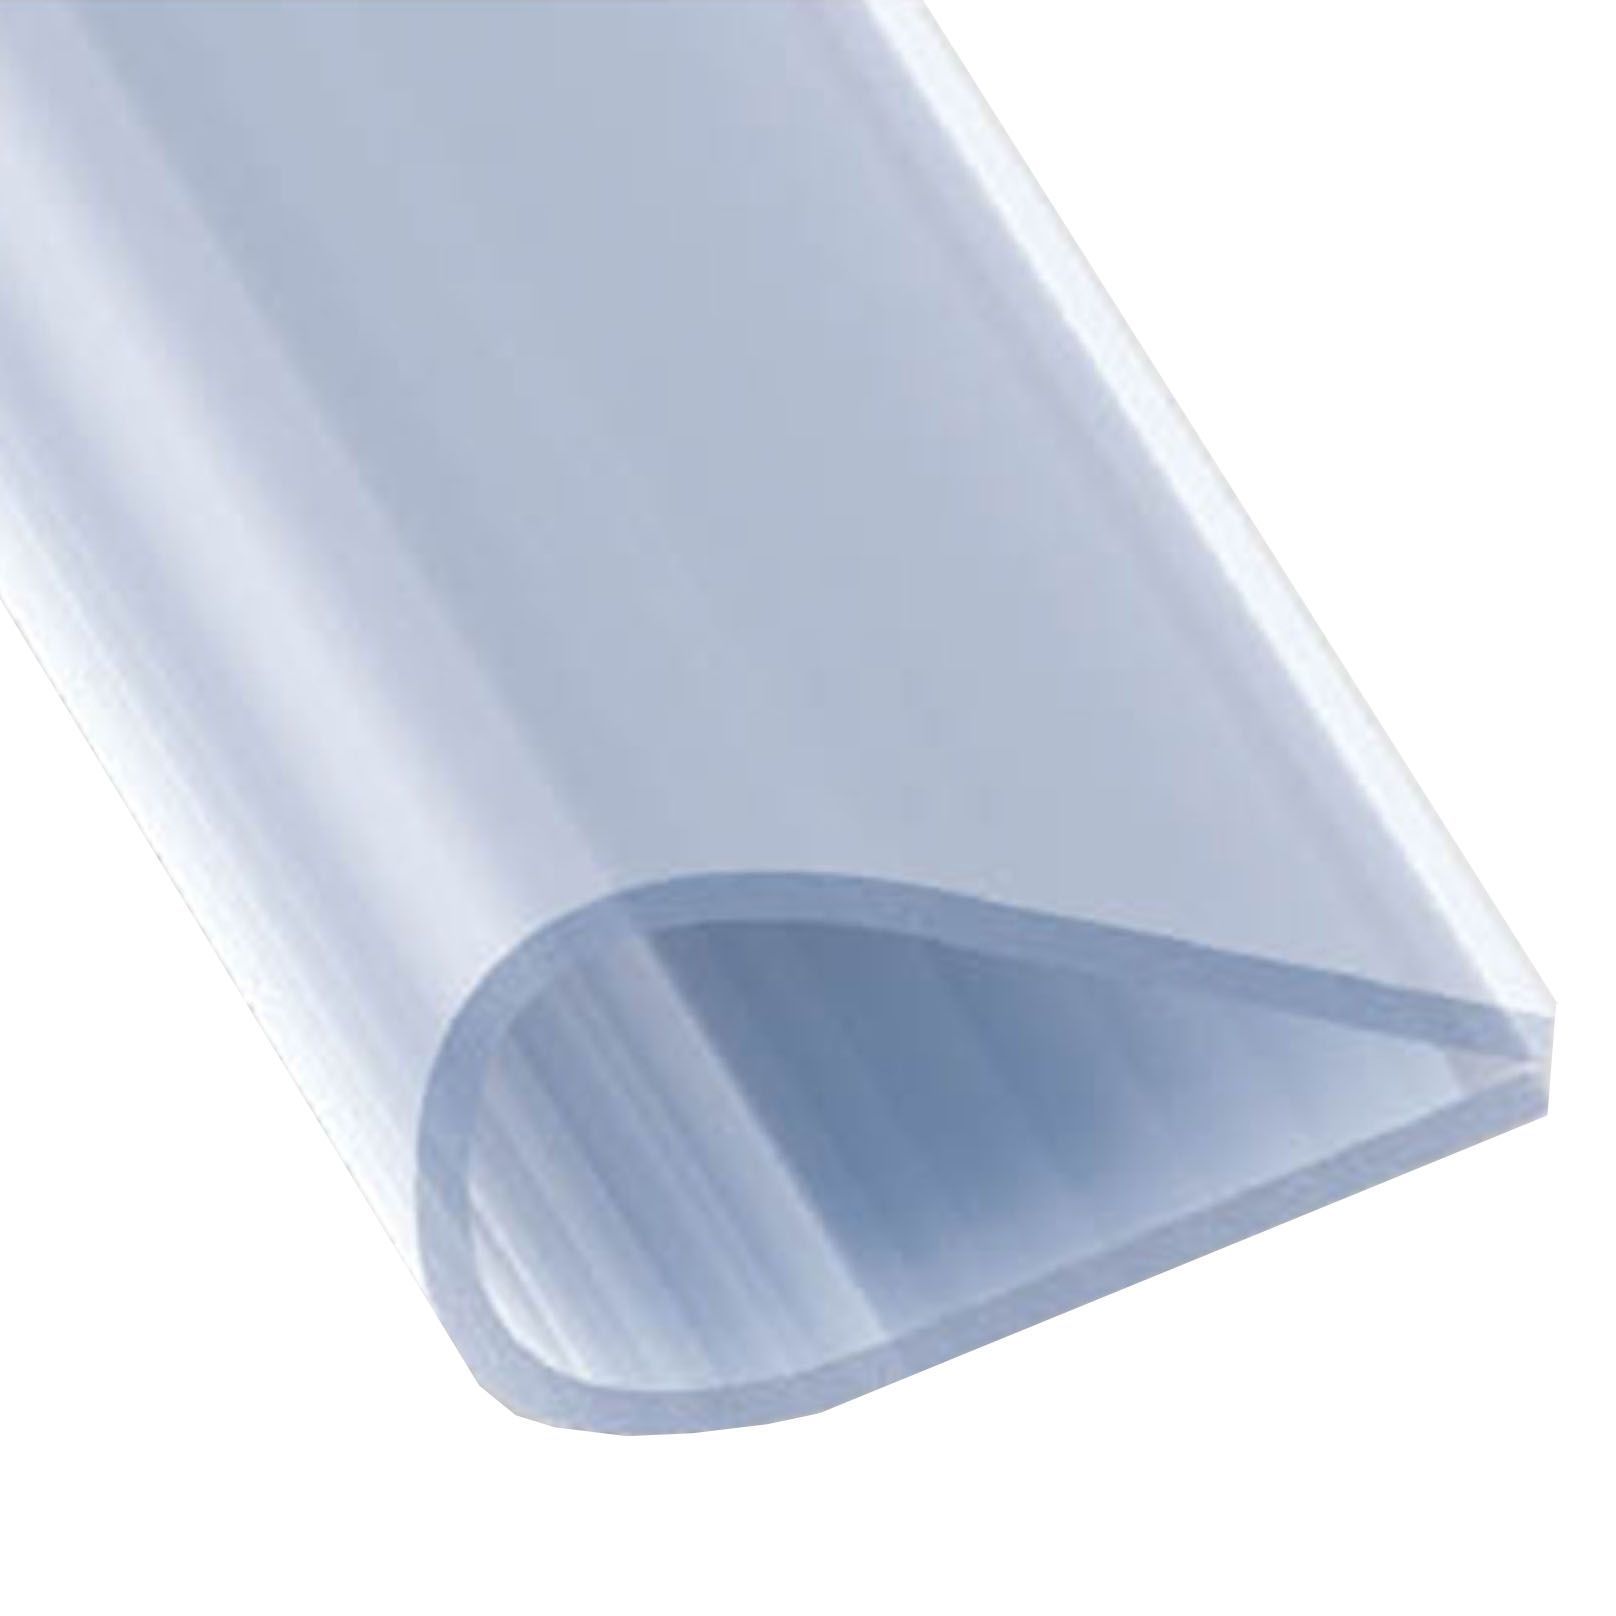 Profilé H PVC blanc 4x25mm L.1m